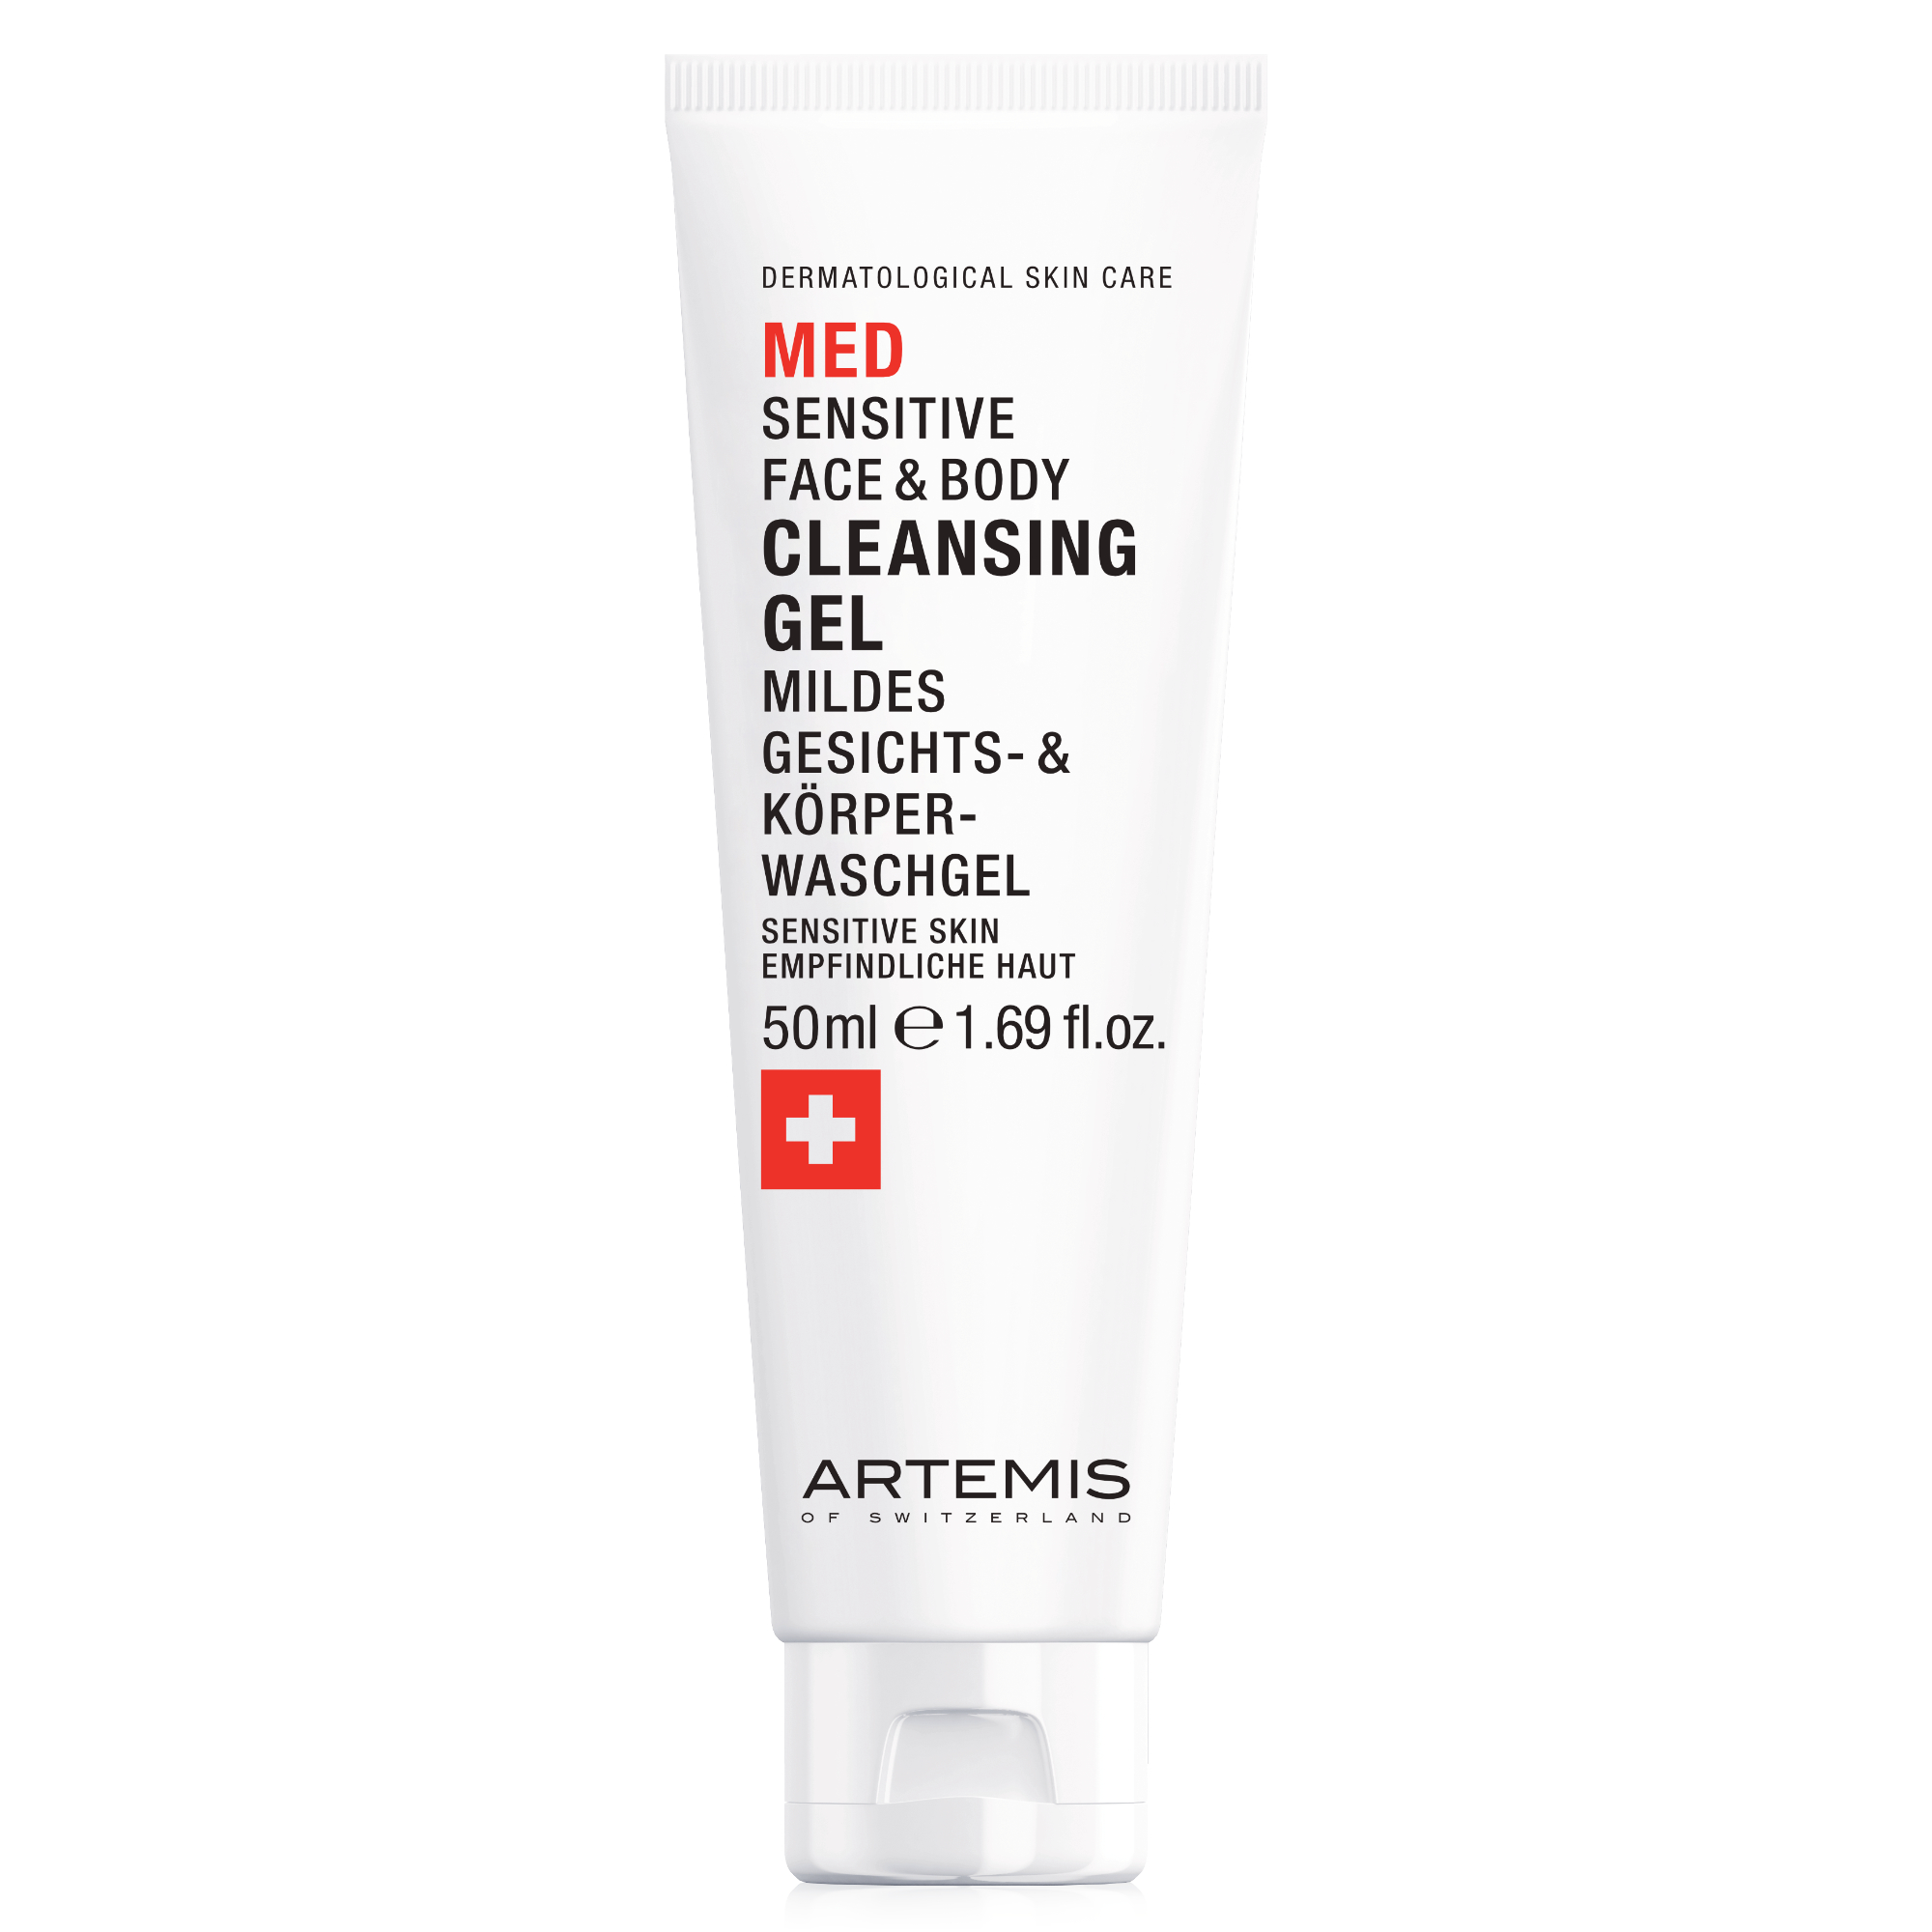 Artemis MED Sensitive Face & Body Cleansing Gel 50ml 